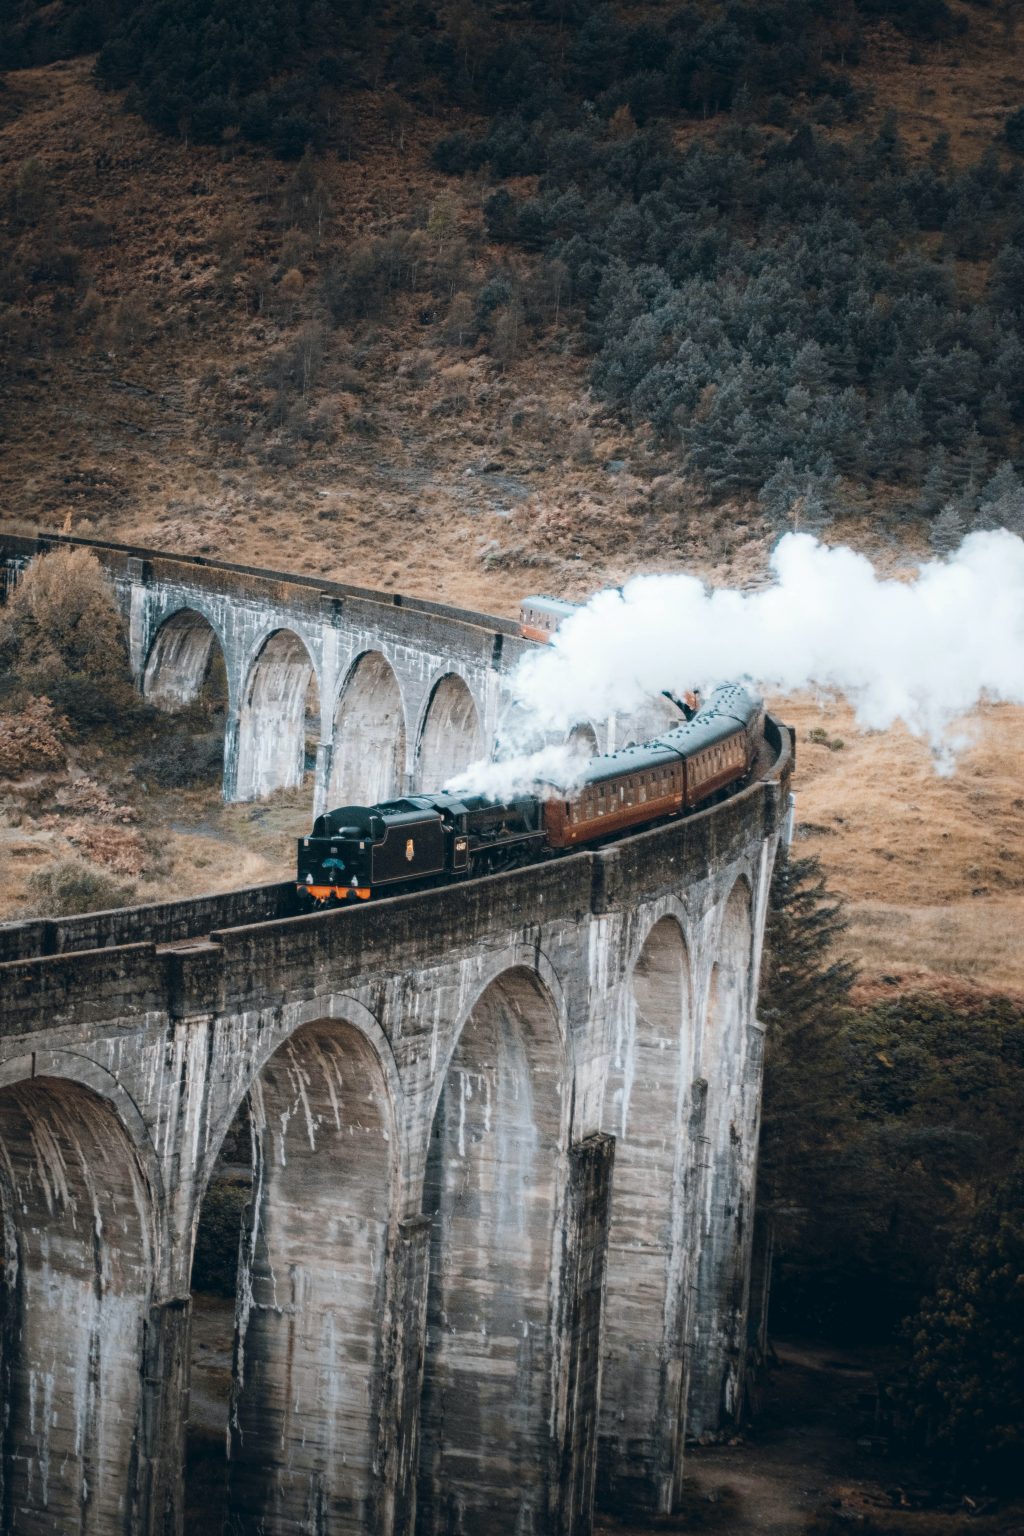 Tain passing on a railway bridge